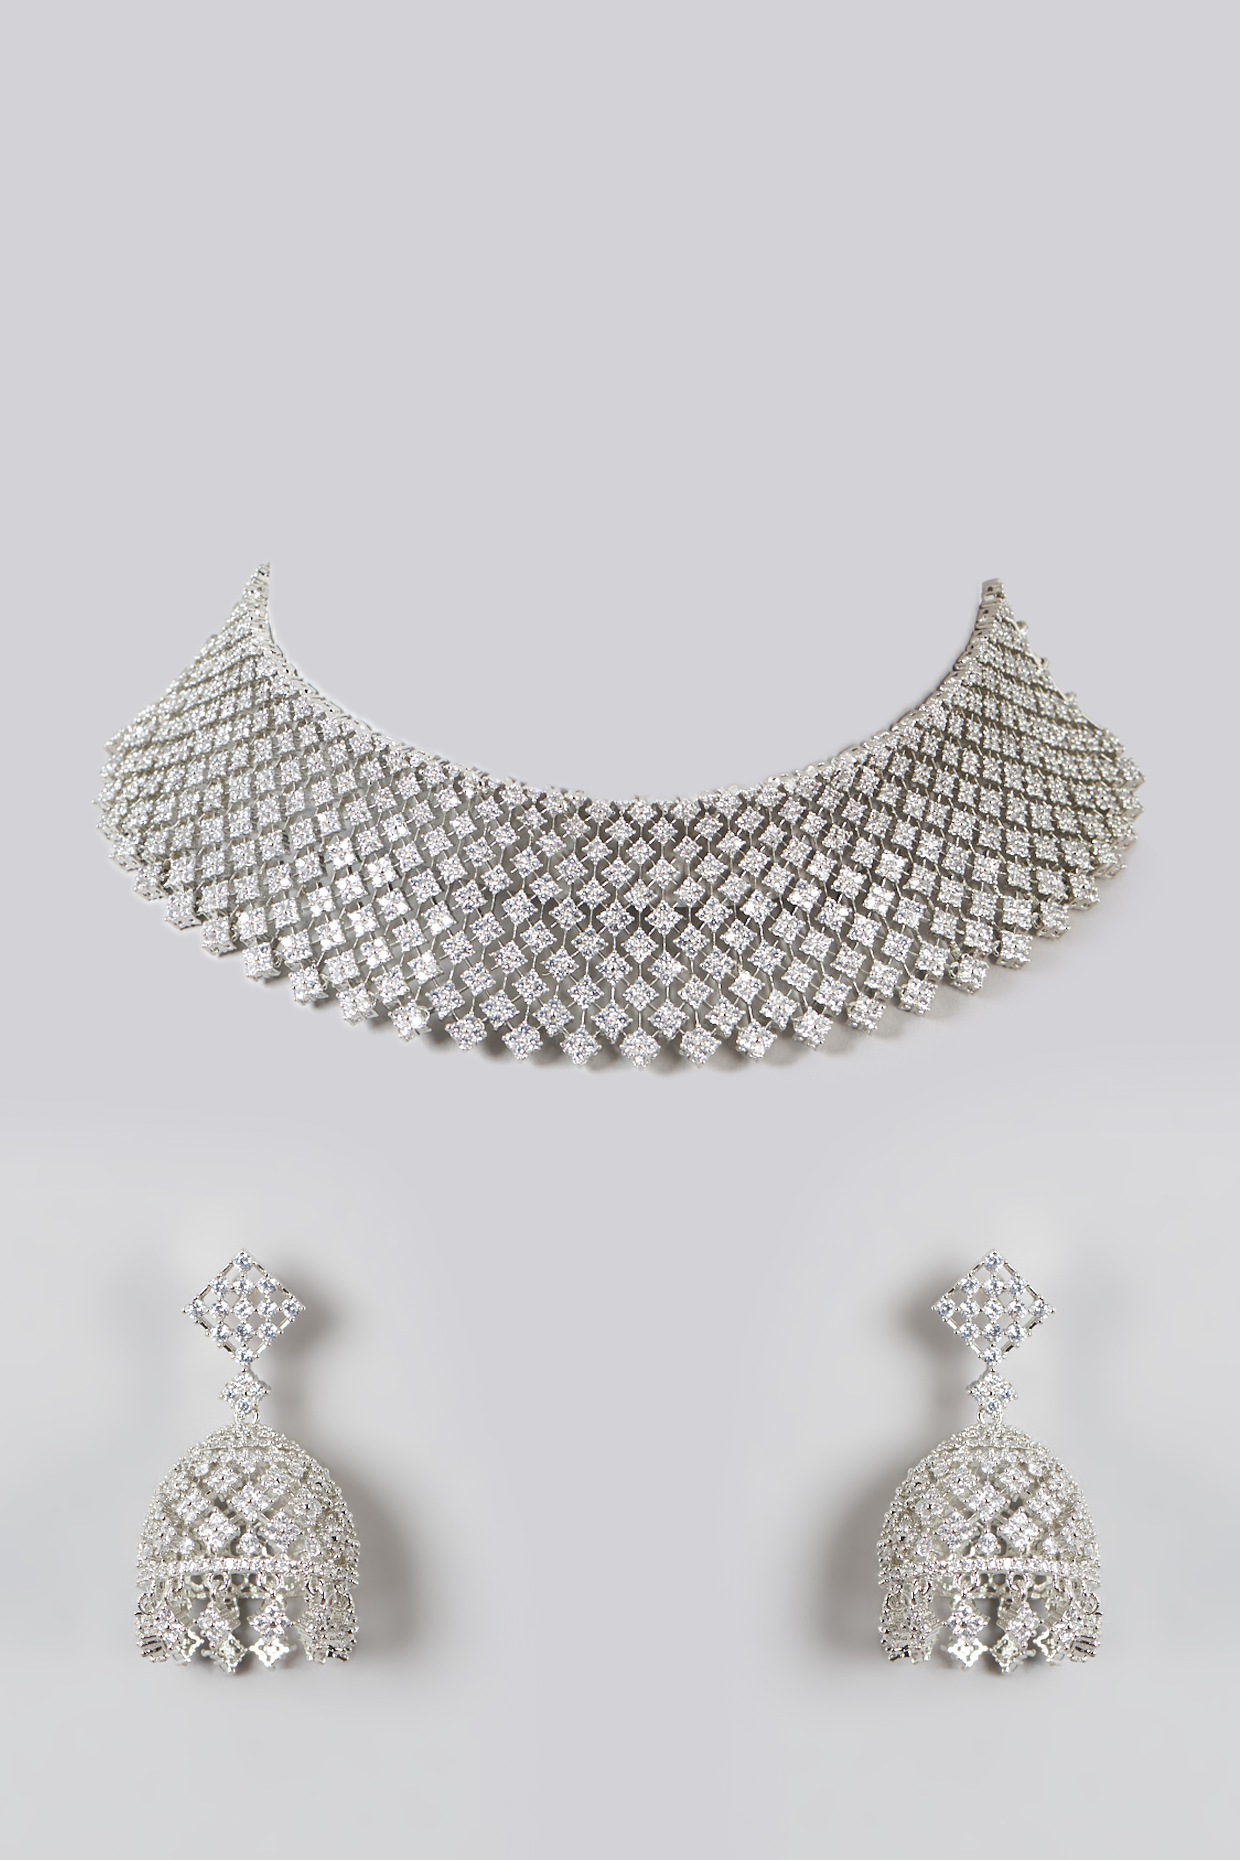 Stunning Black Diamond Choker Necklace Set